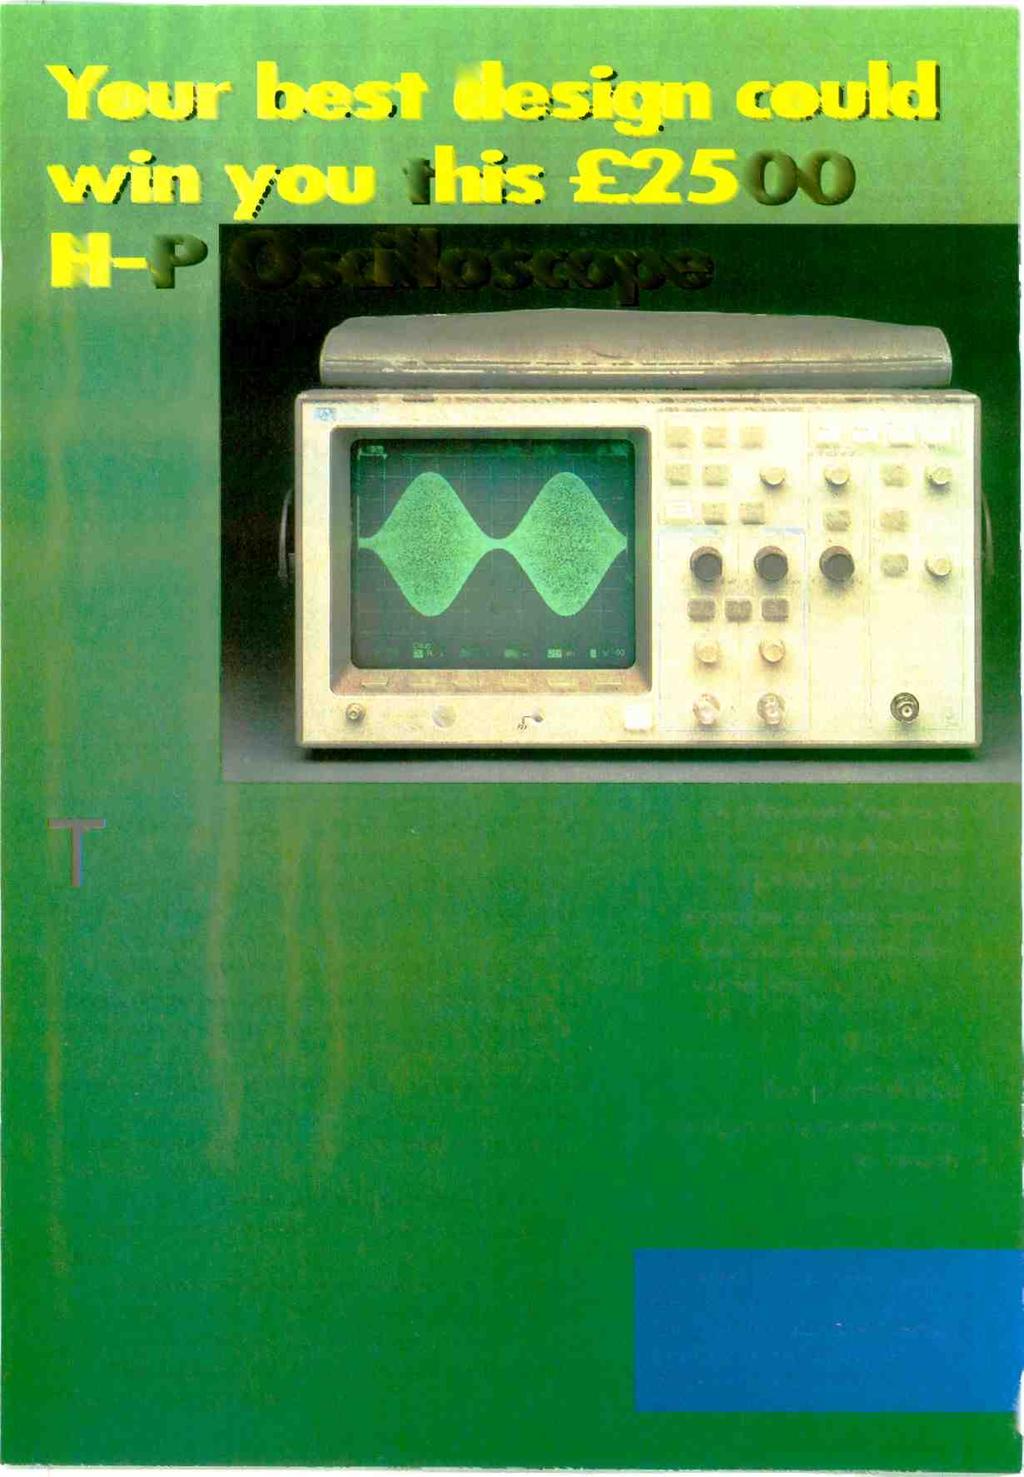 H -P Oscilloscope HAWLETI: 54800A loo VI M& PACKARD OSCILLOSOMI 2 CNANNGL TRIGGER Aul:) Molar VERTICAL Volts/Om Von/DA HIS Hewlett-Packard oscilloscope combines the feel and display of a top line